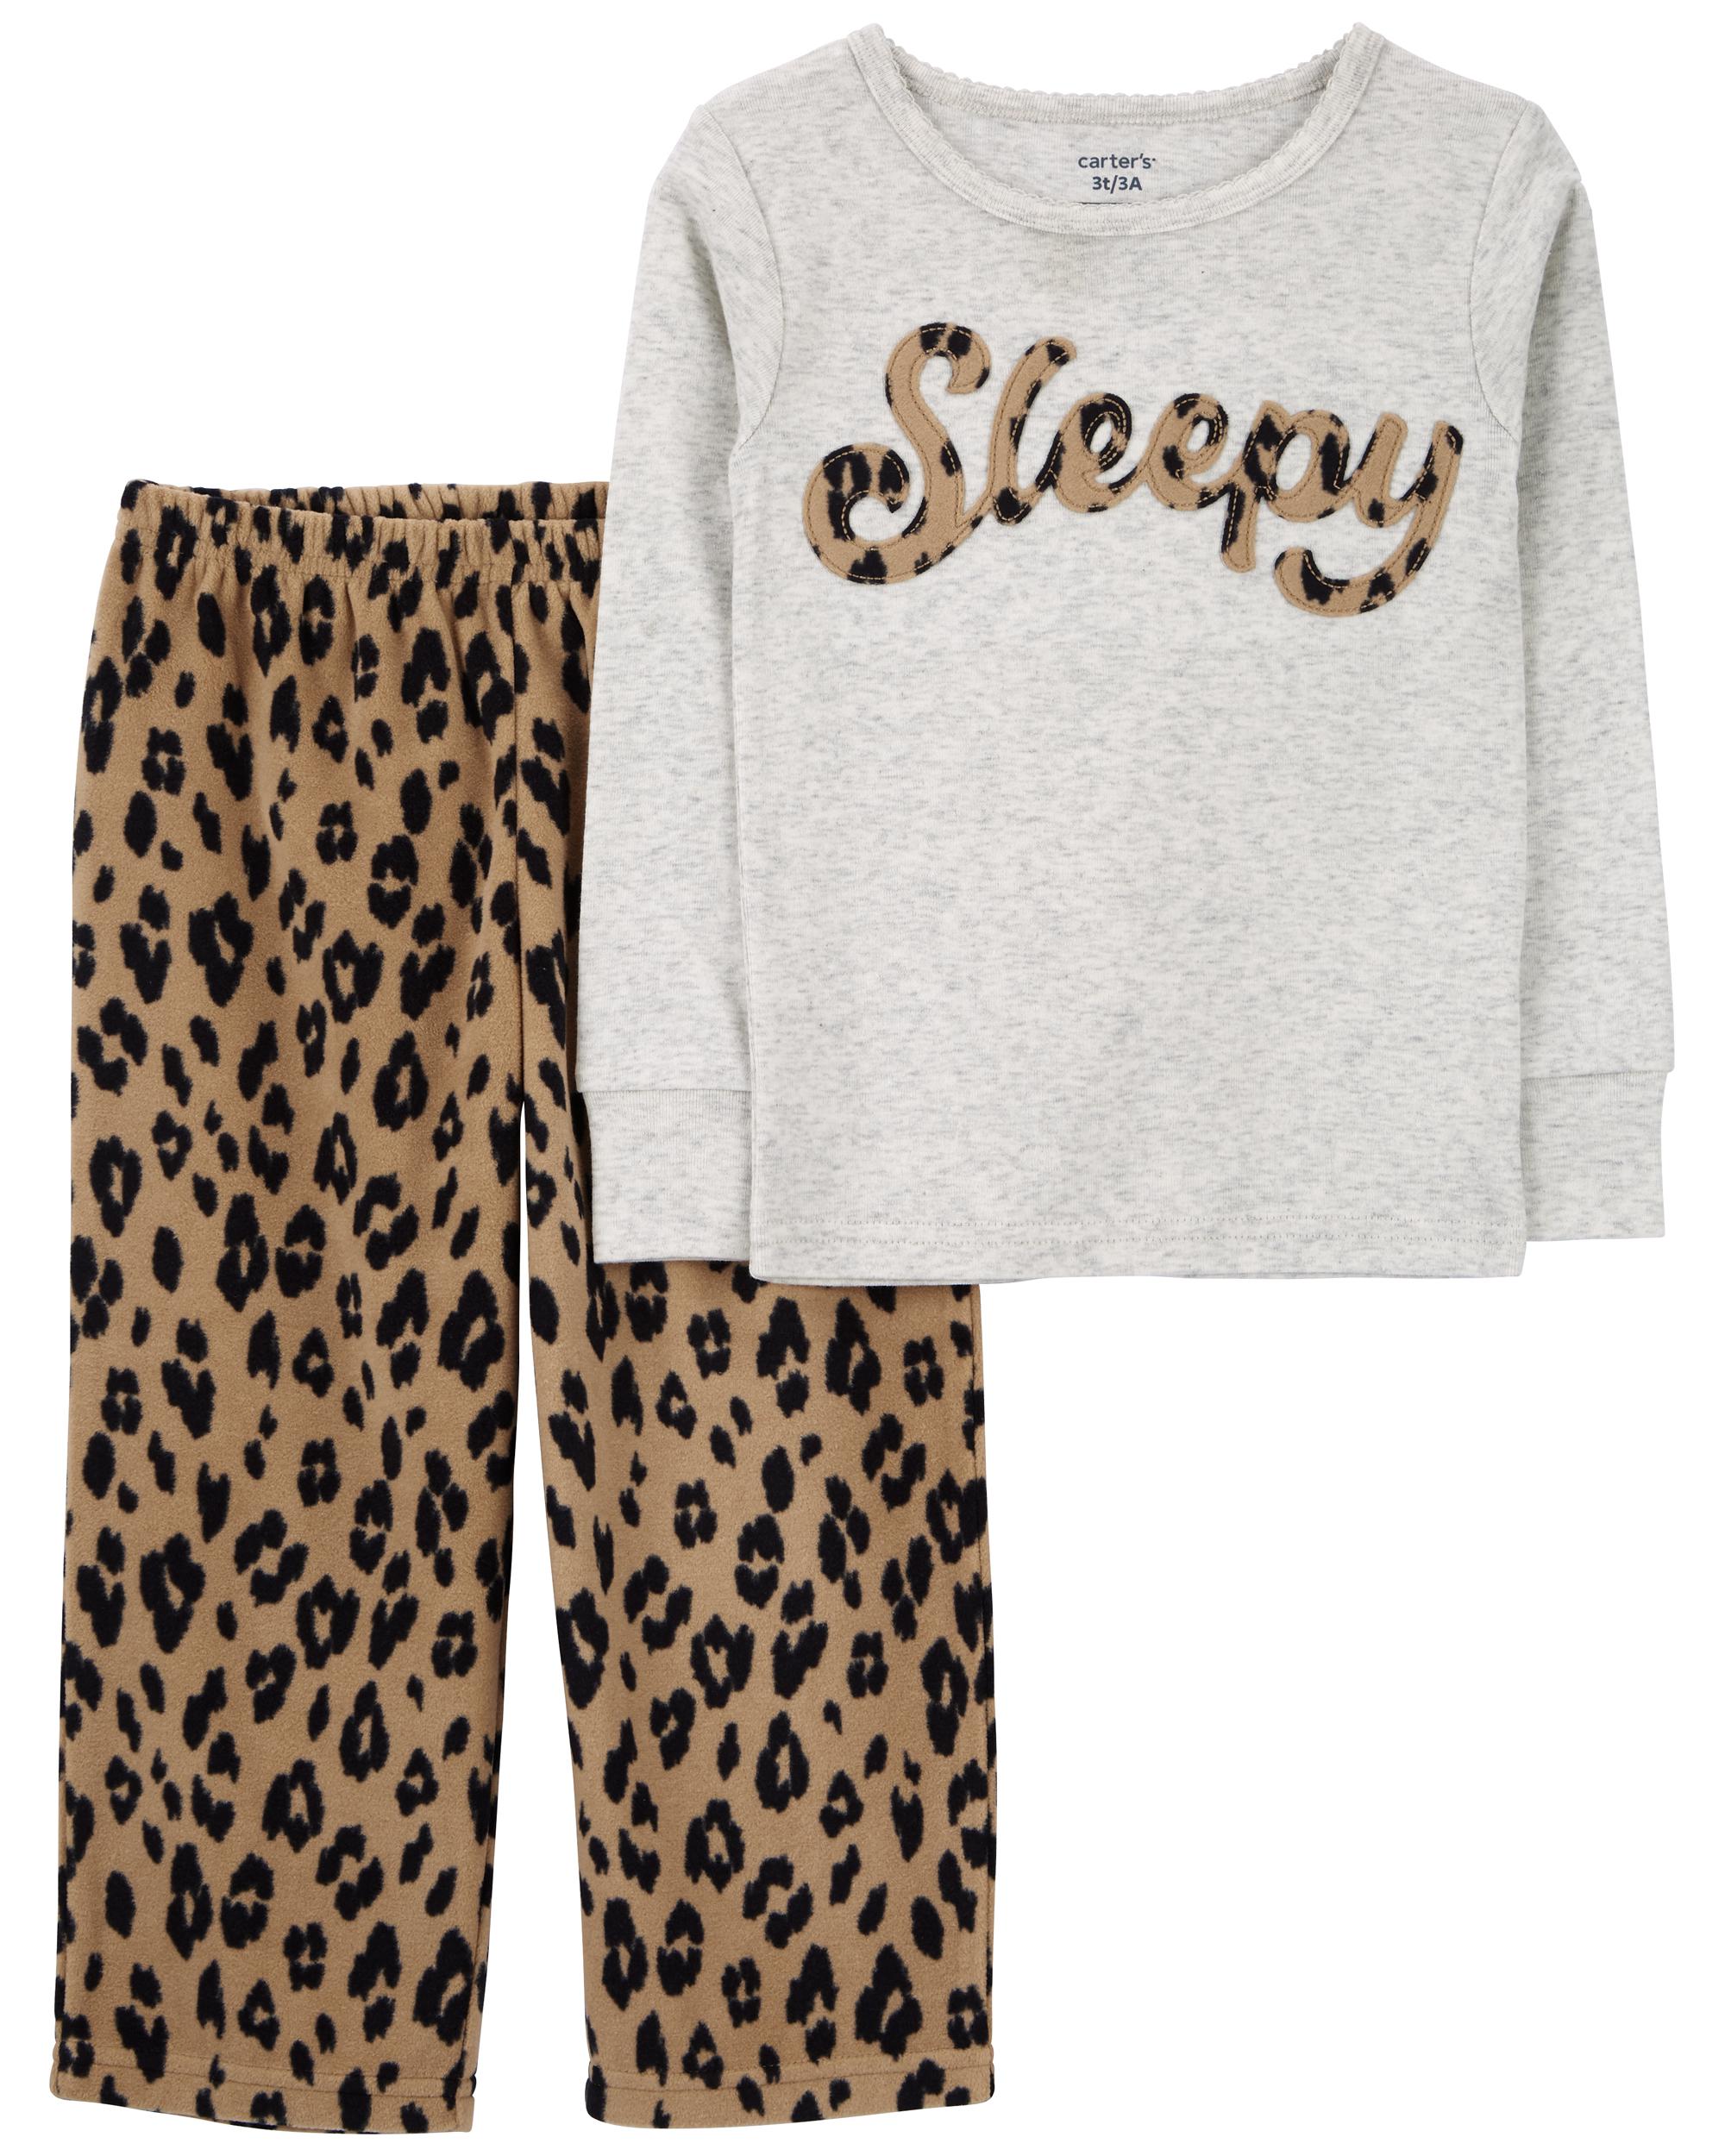 Carters Oshkosh 2-Piece Leopard Fleece Pyjamas